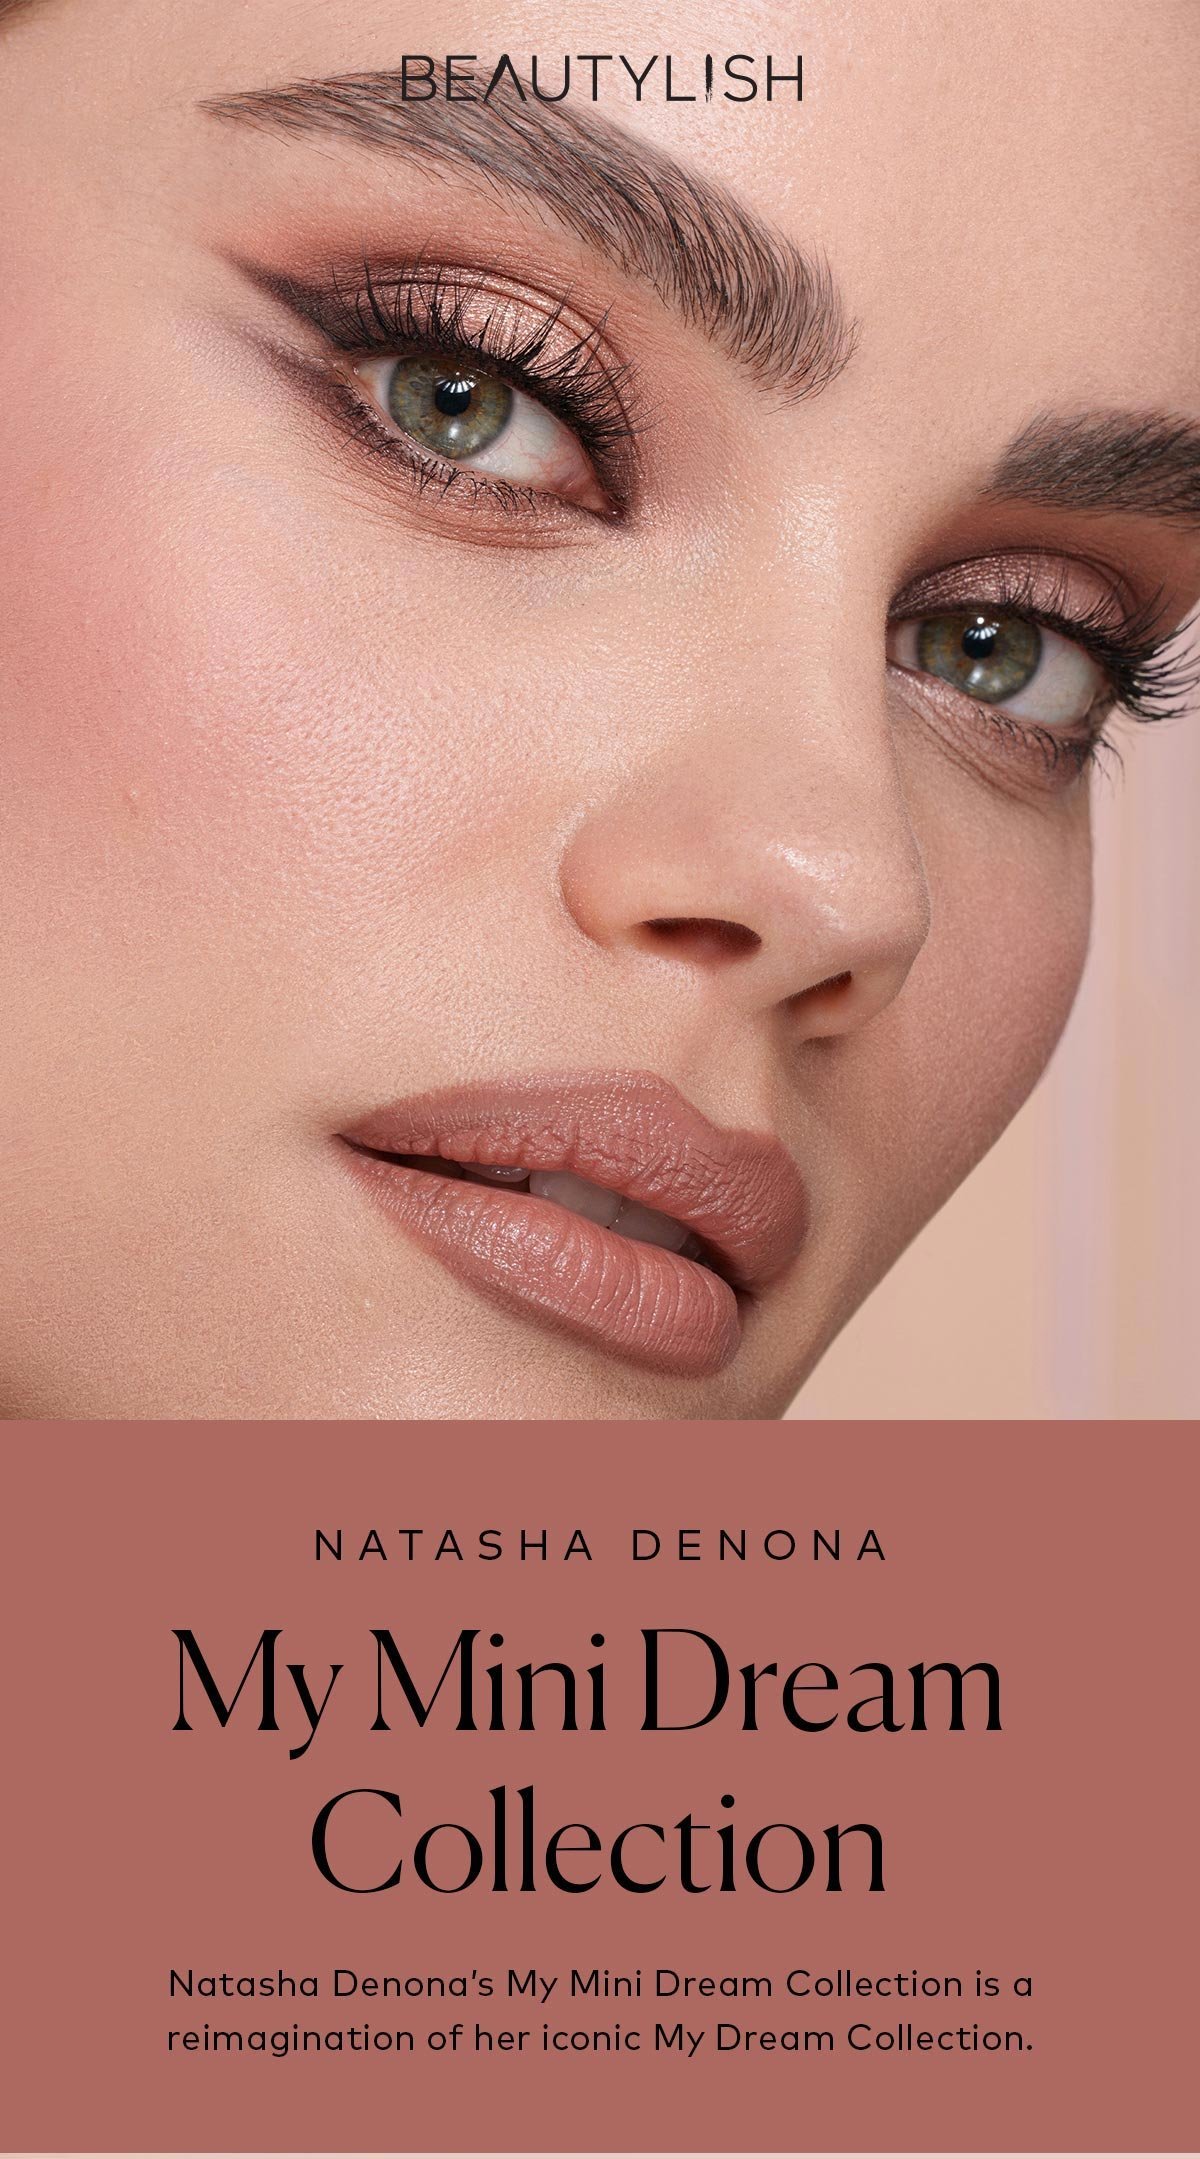 Shop the Natasha Denona My Mini Dream Collection on Beautylish.com! 